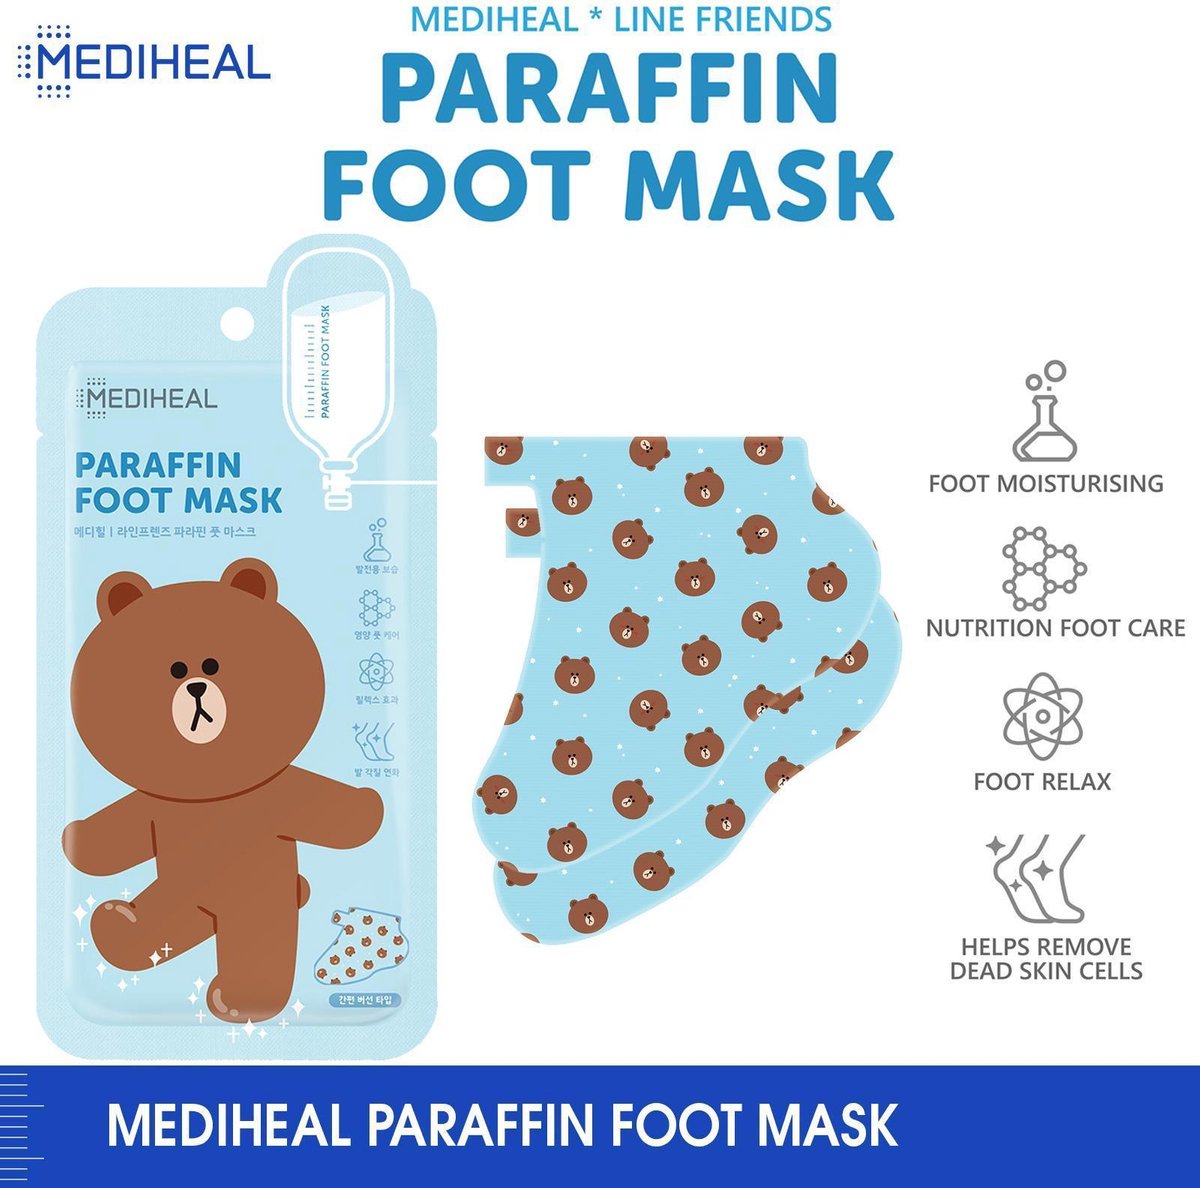 Parafin foot mask - 2x2 Voetenmaskers van Mediheal